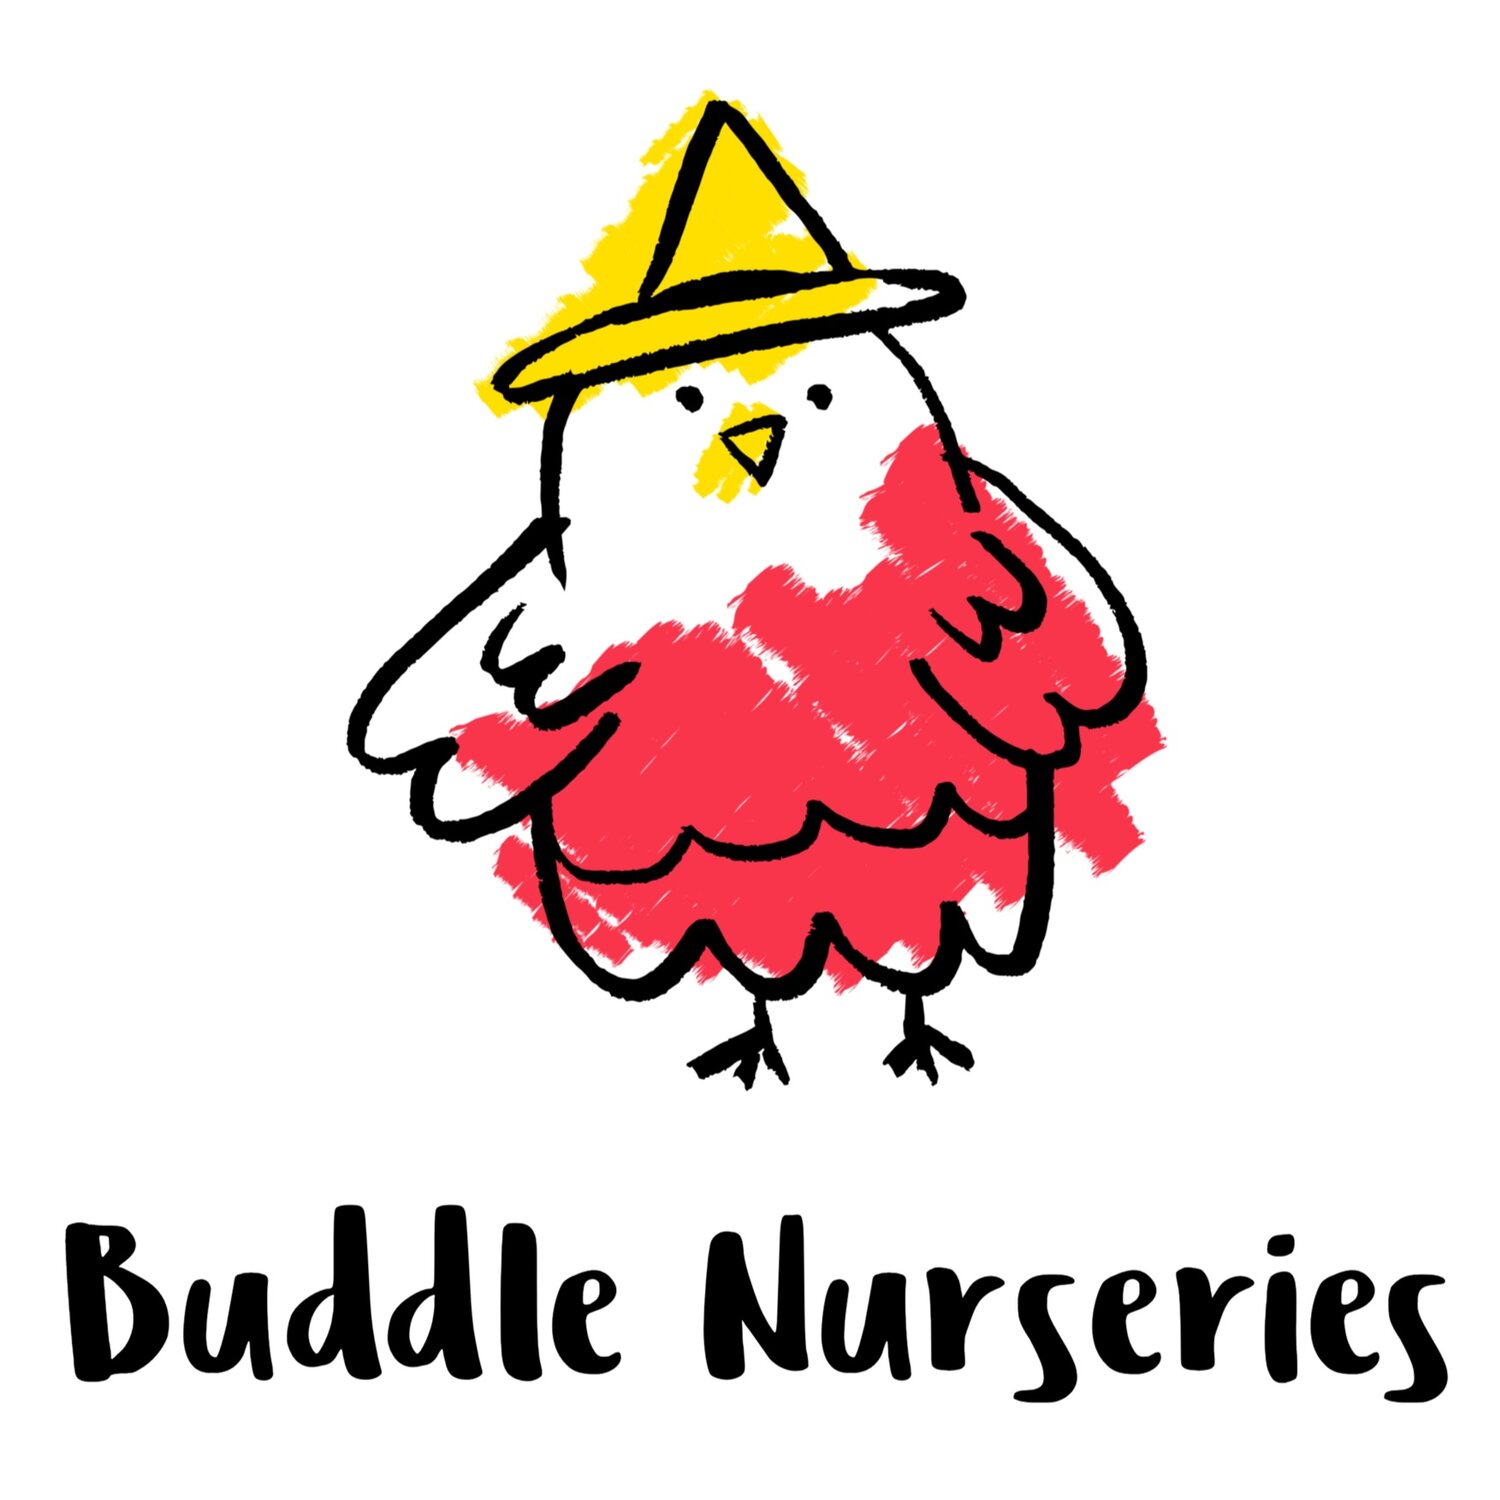 Buddle Nurseries - Affordable Daycare | Nursery Group